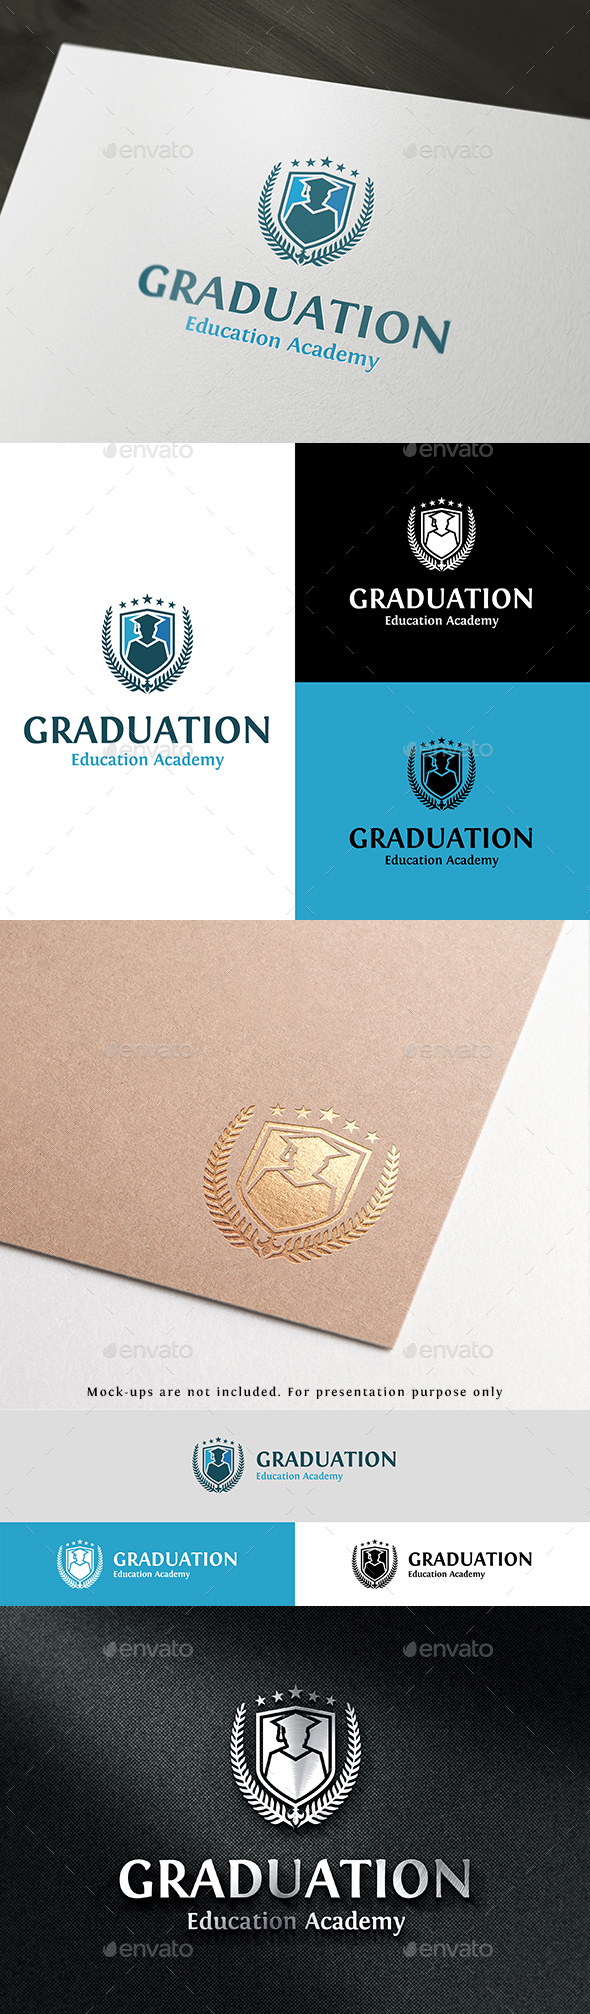 Graduation Academy or University Logo